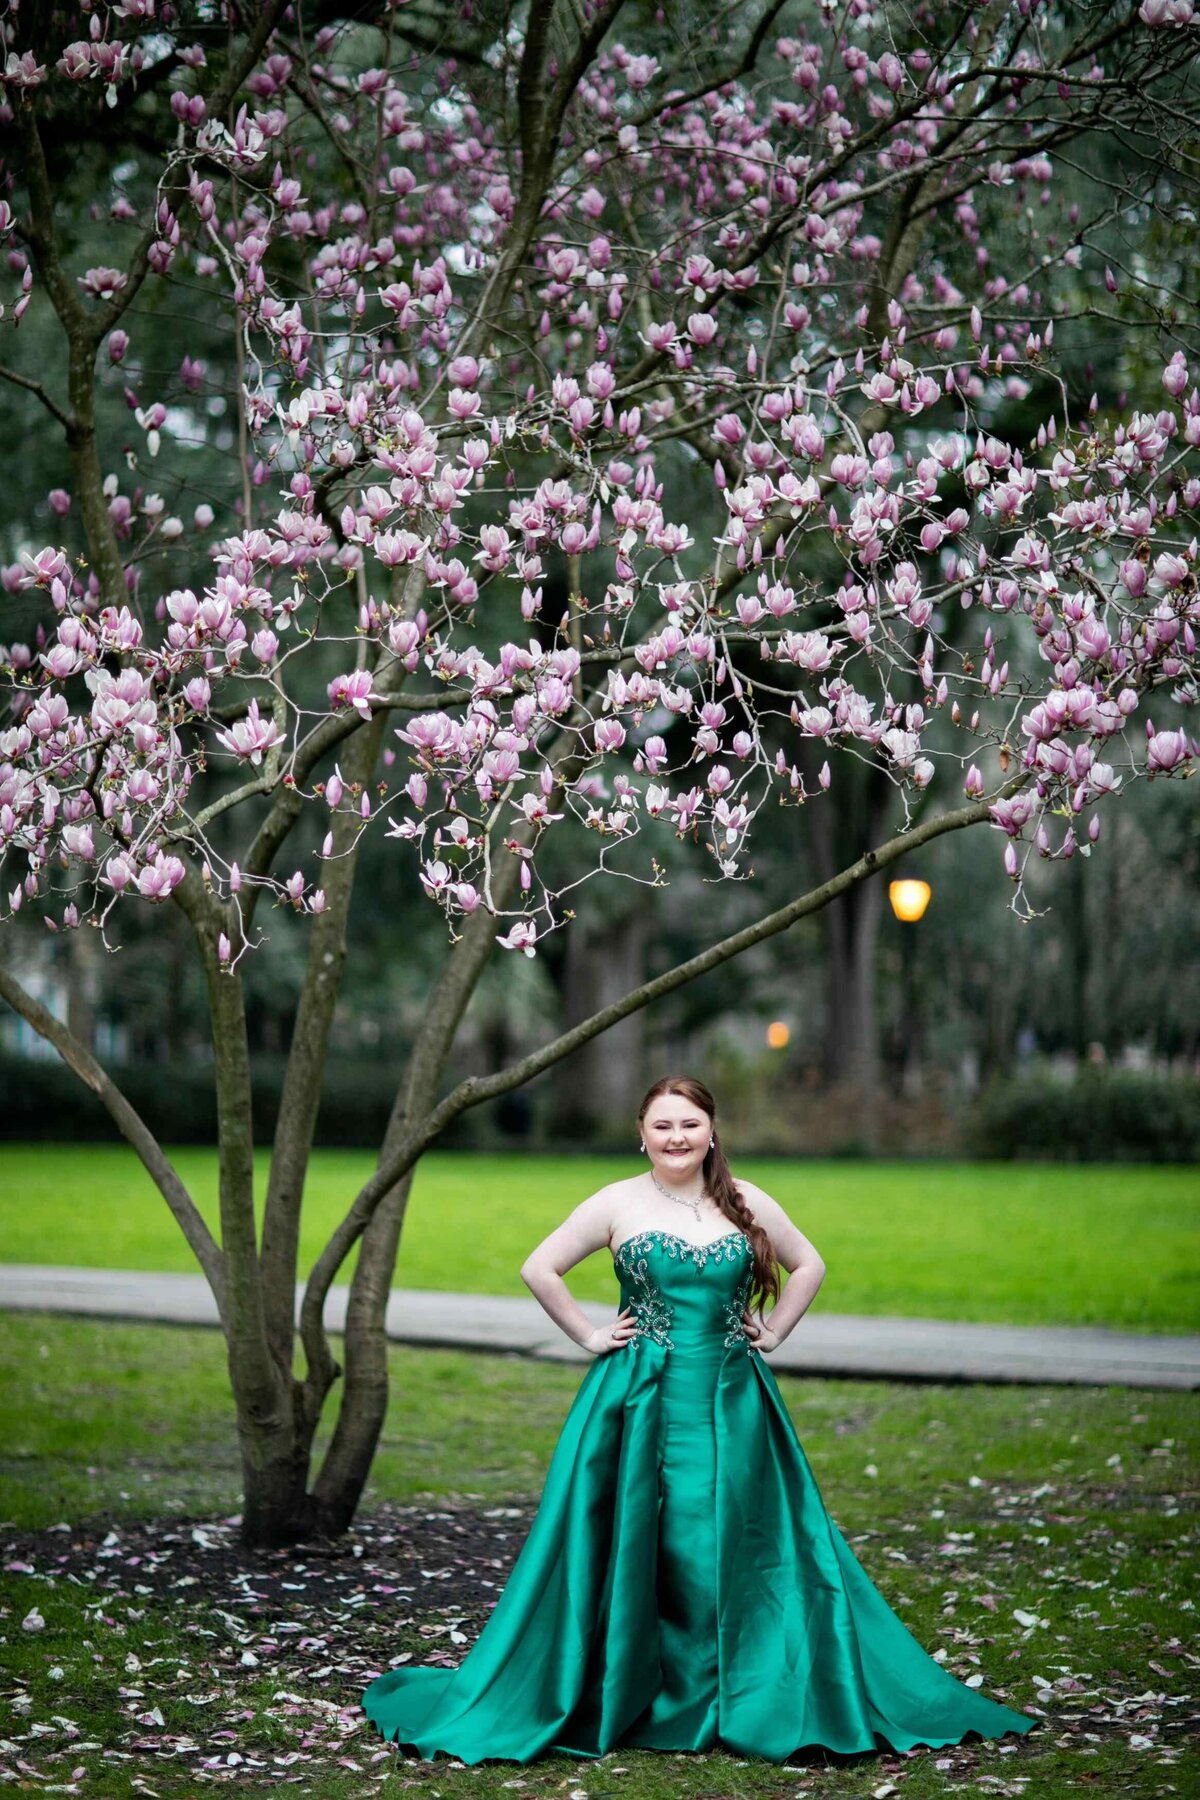 senior in green ballgown under tree with pink flowers